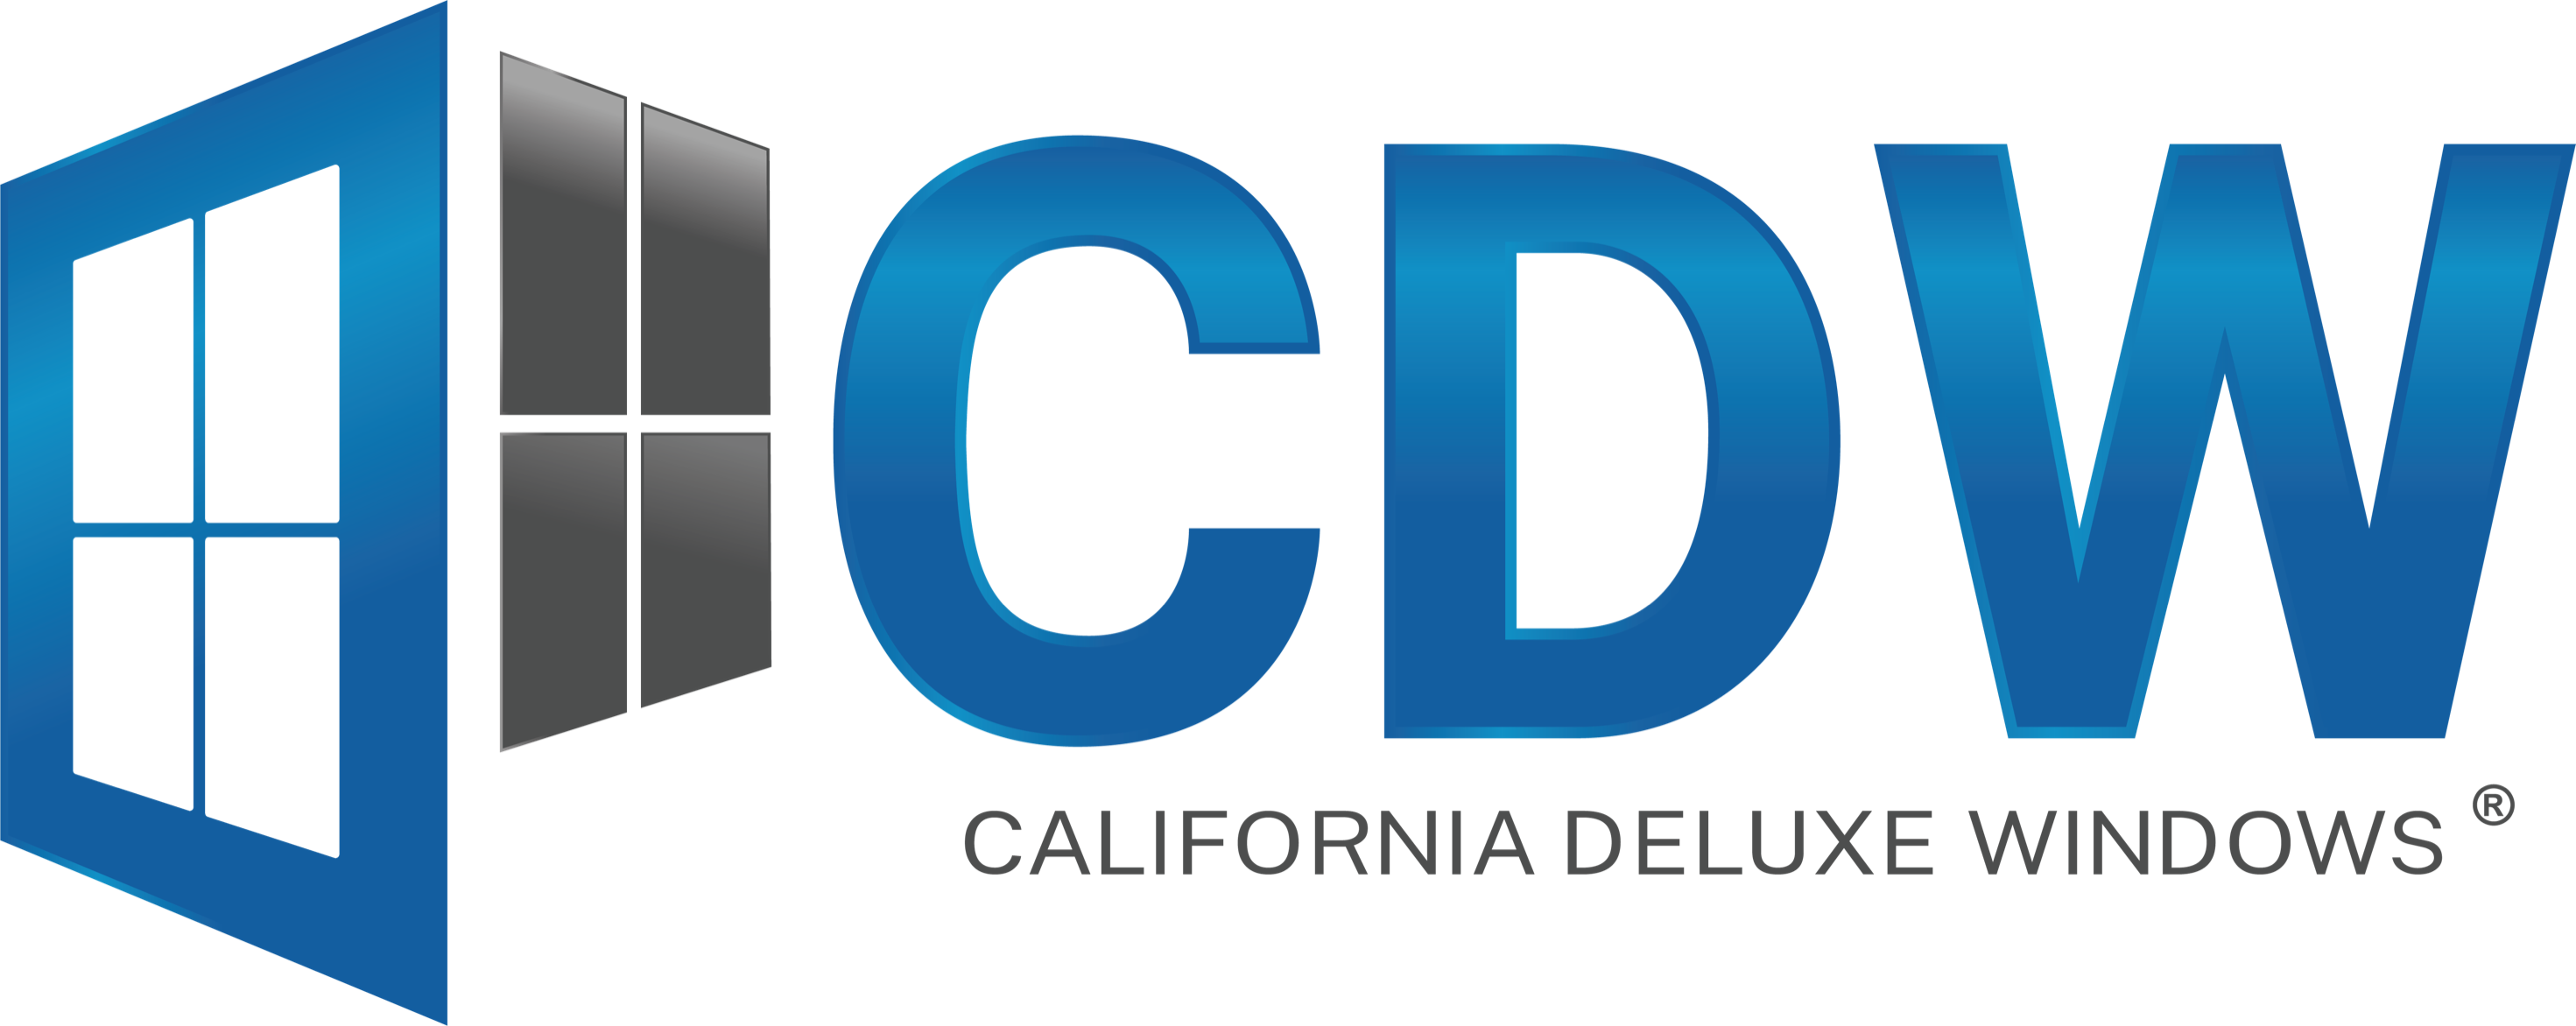 California Deluxe Windows (CDW)